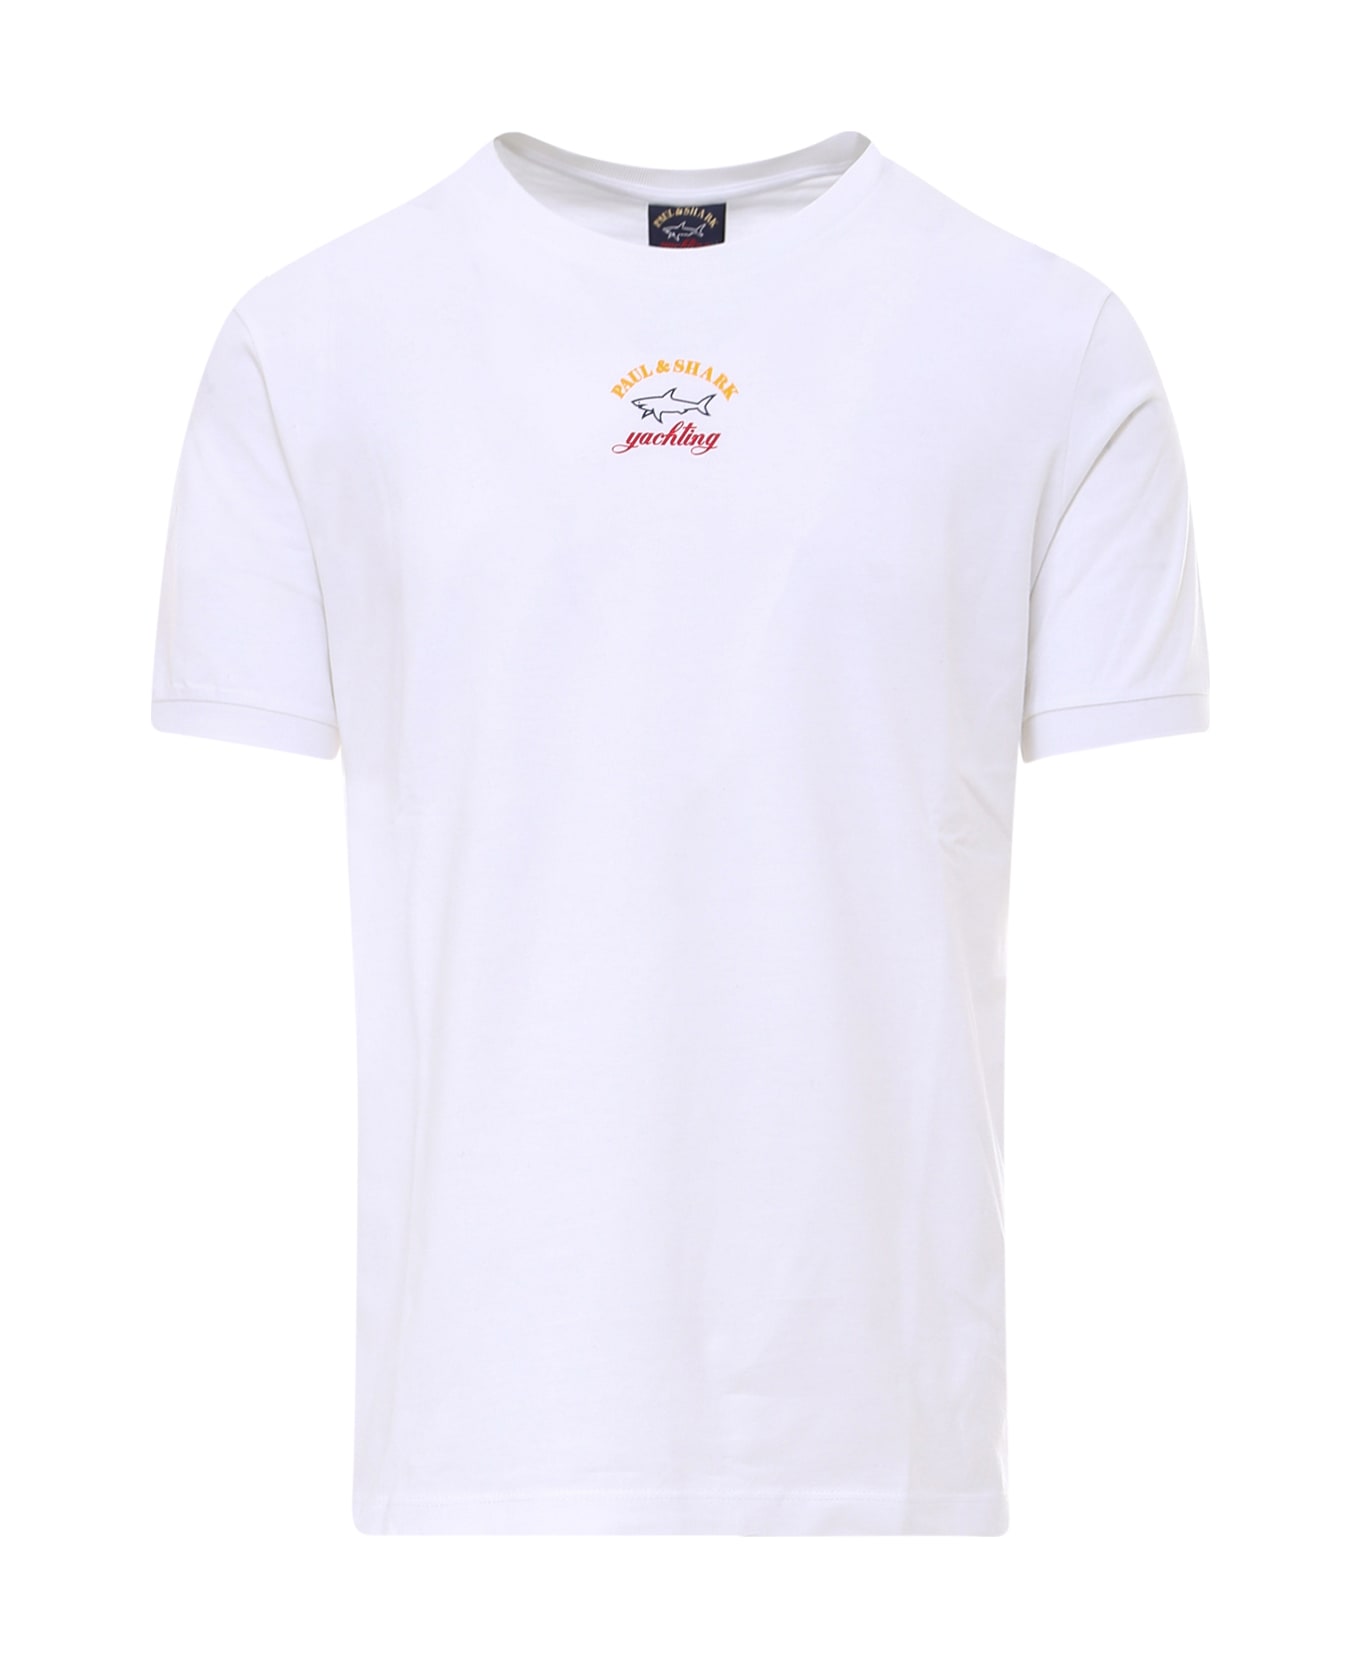 Paul&Shark T-shirt - WHITE